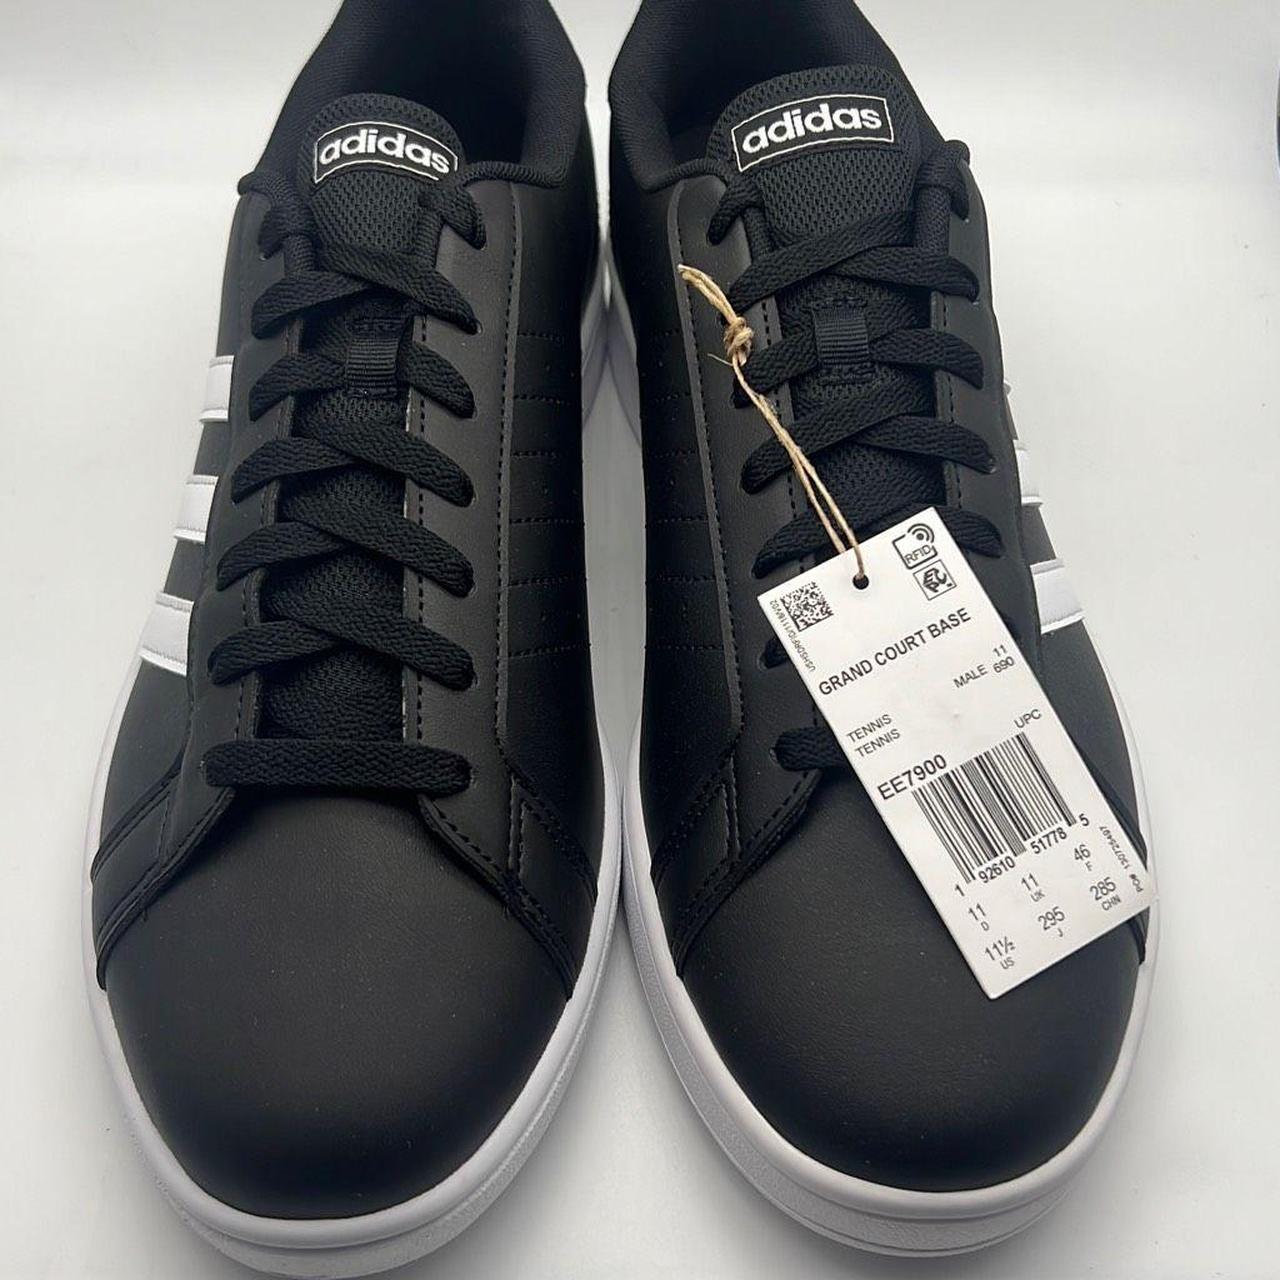 Adidas Grand Court Base Men's Tennis Shoes EE7900 Black/White